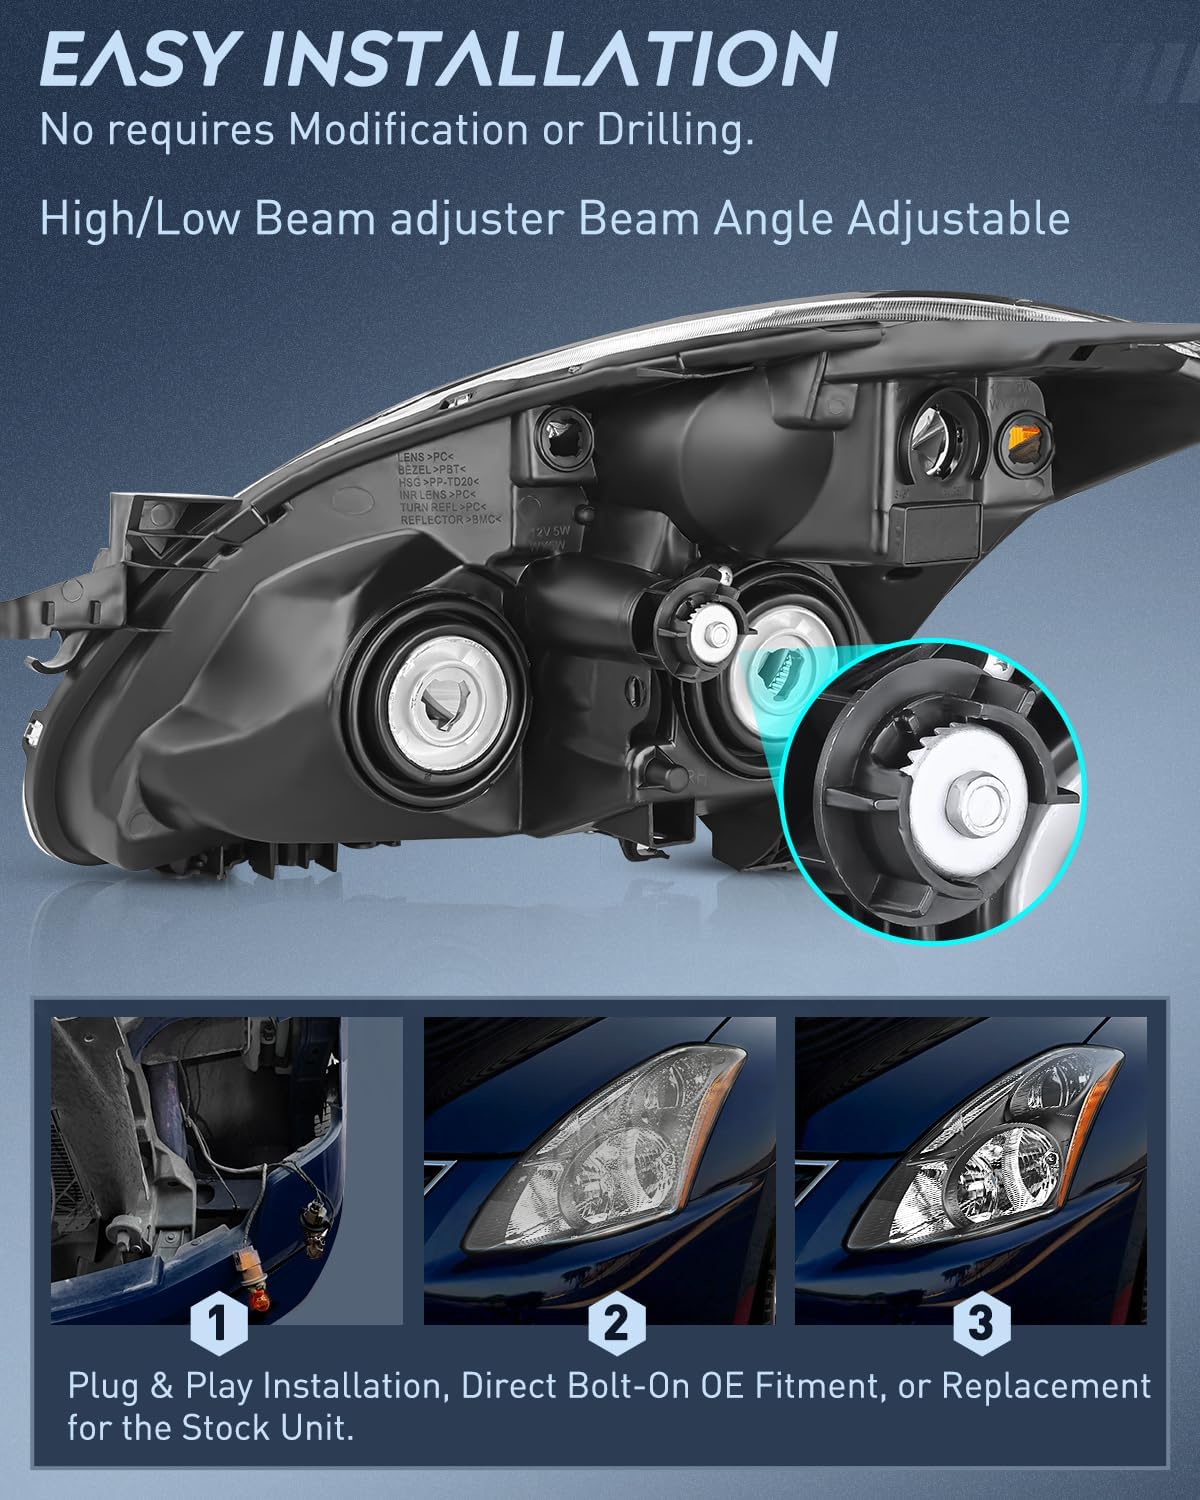 2010-2012 Nissan Altima 4Door Sedan Headlight Assembly Black Housing Amber Reflector Upgraded Clear Lens Nilight